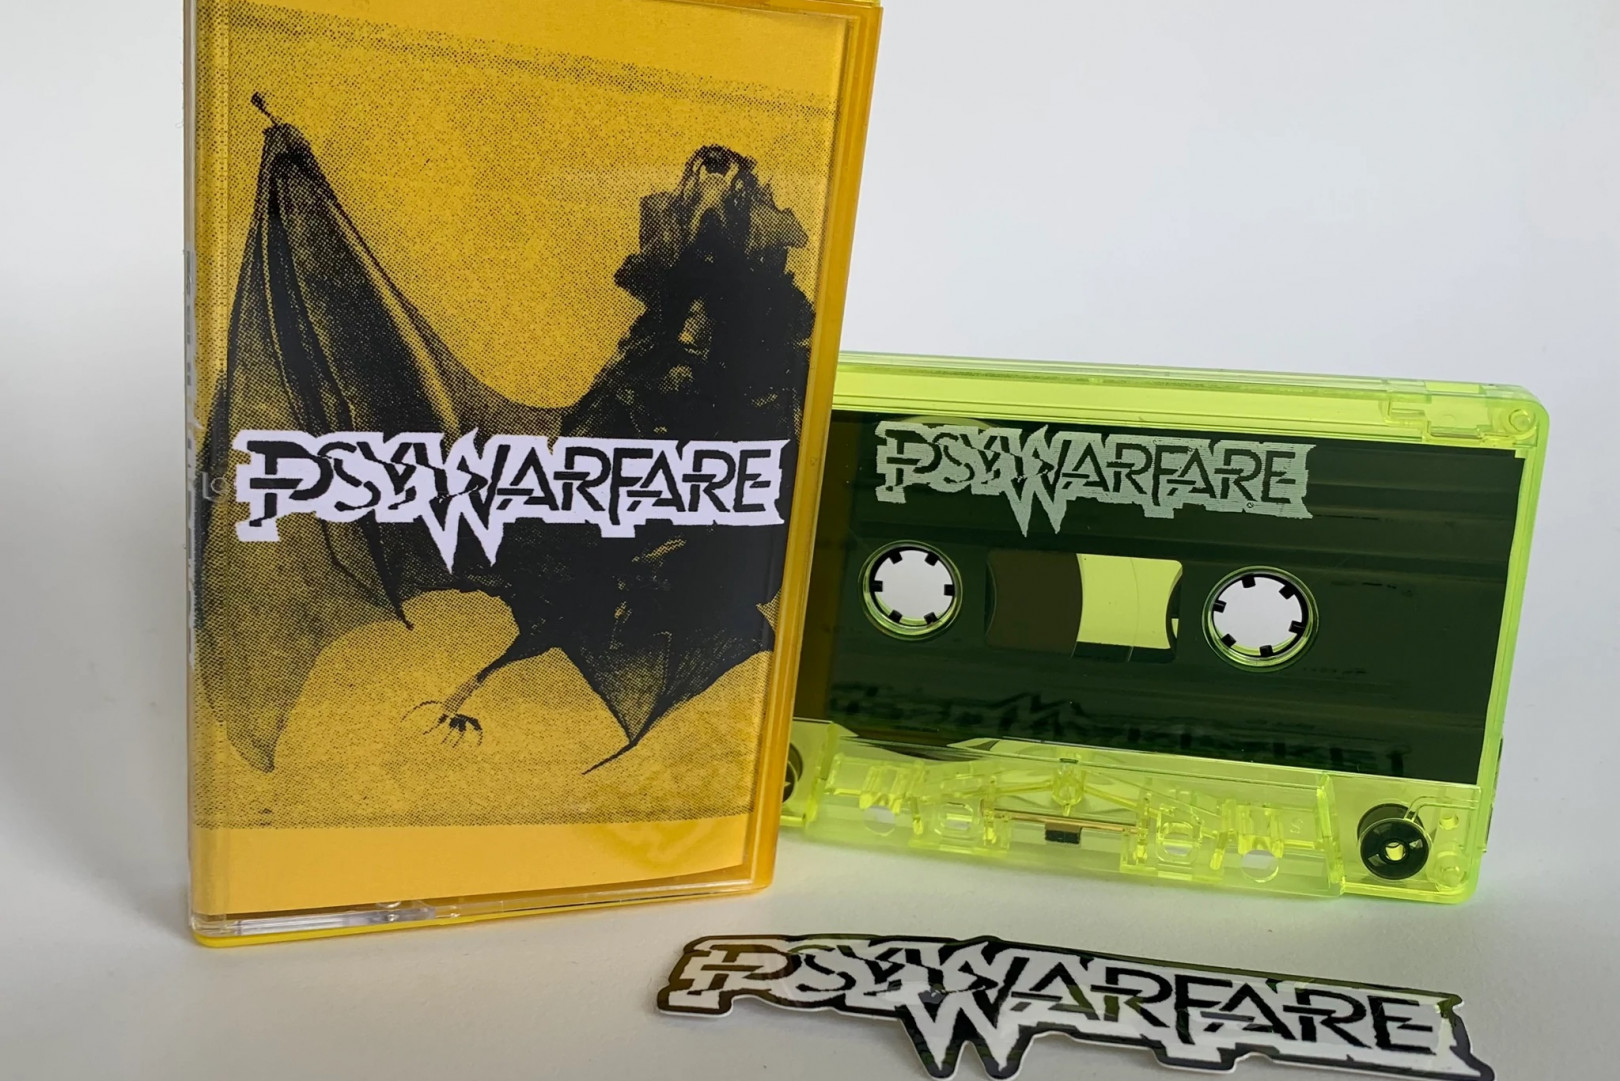 Psywarfare releases live cassette album